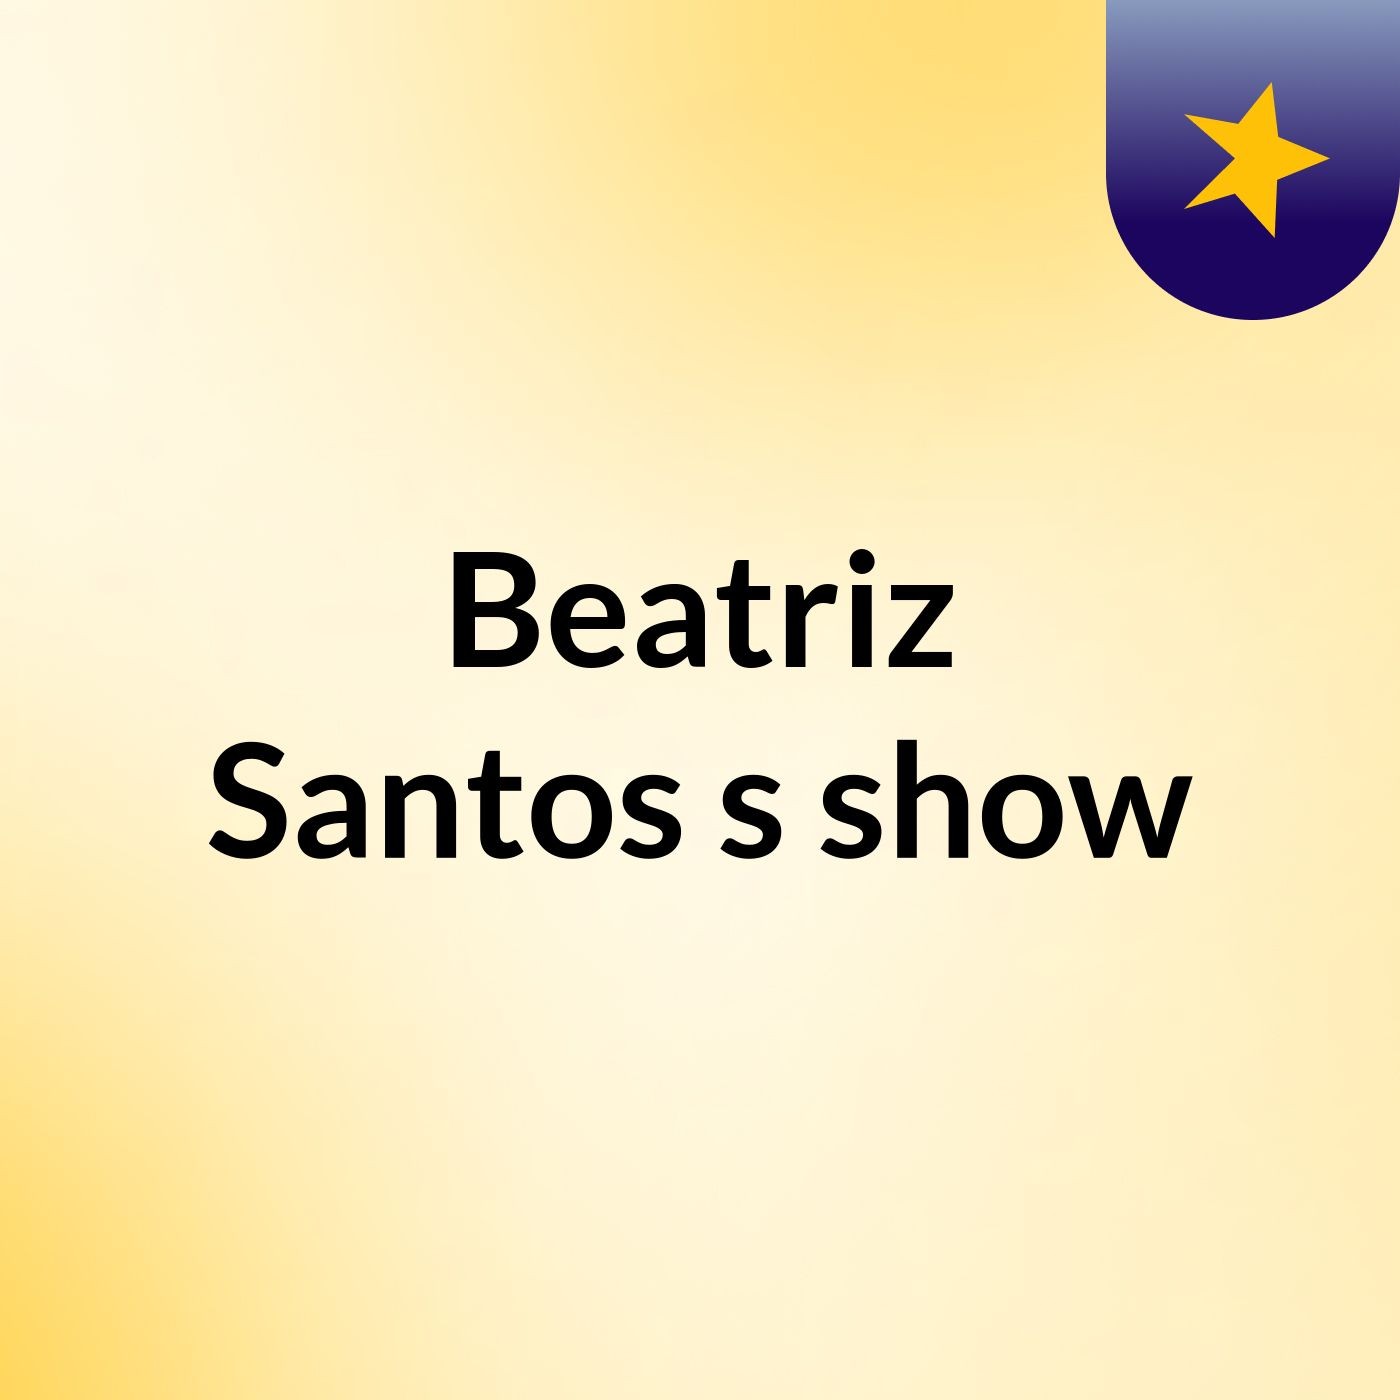 Beatriz Santos's show